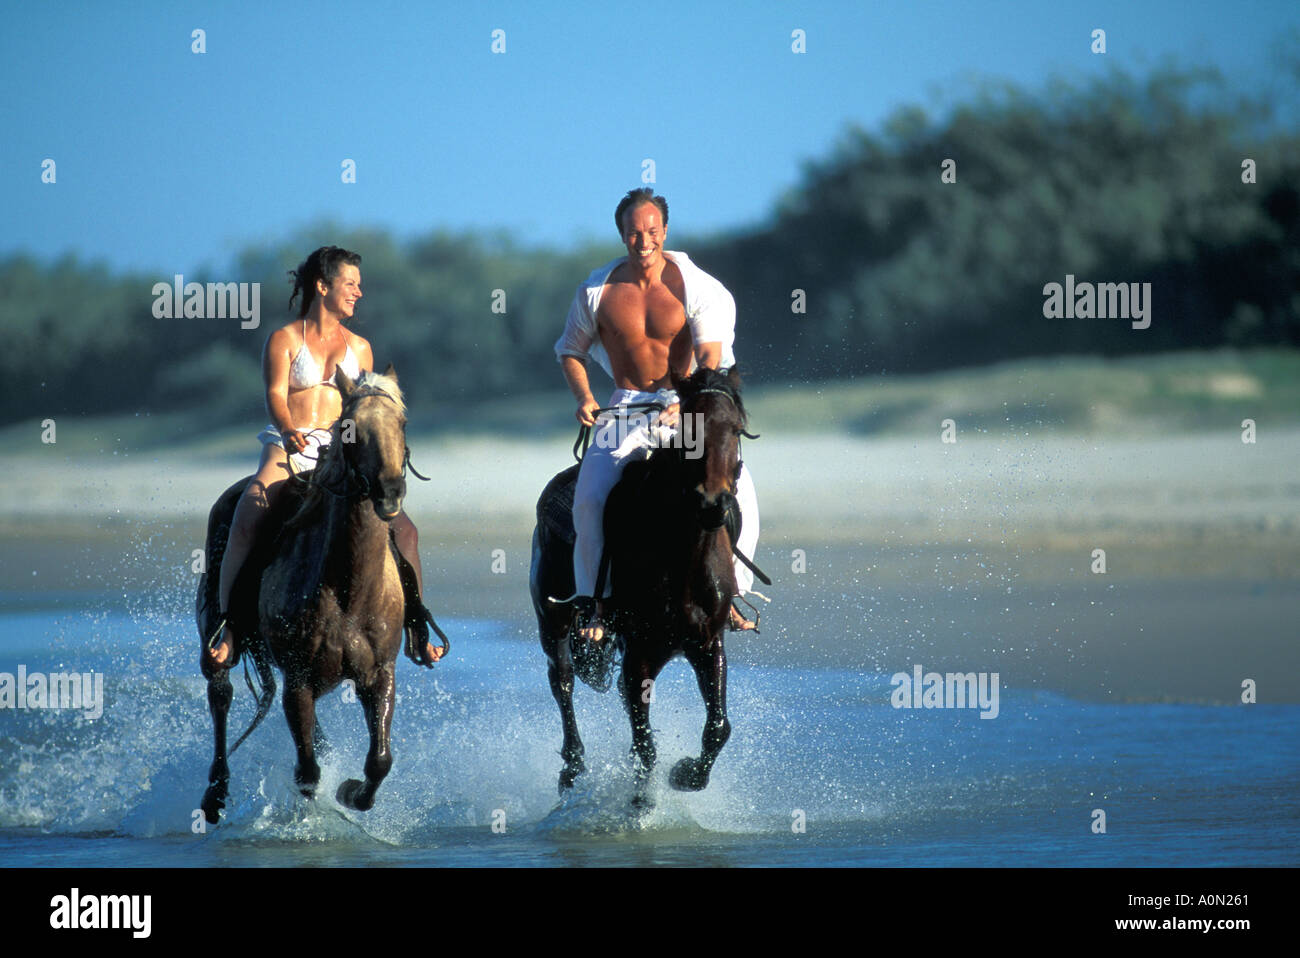 Couple on horse -Fotos und -Bildmaterial in hoher Auflösung – Alamy